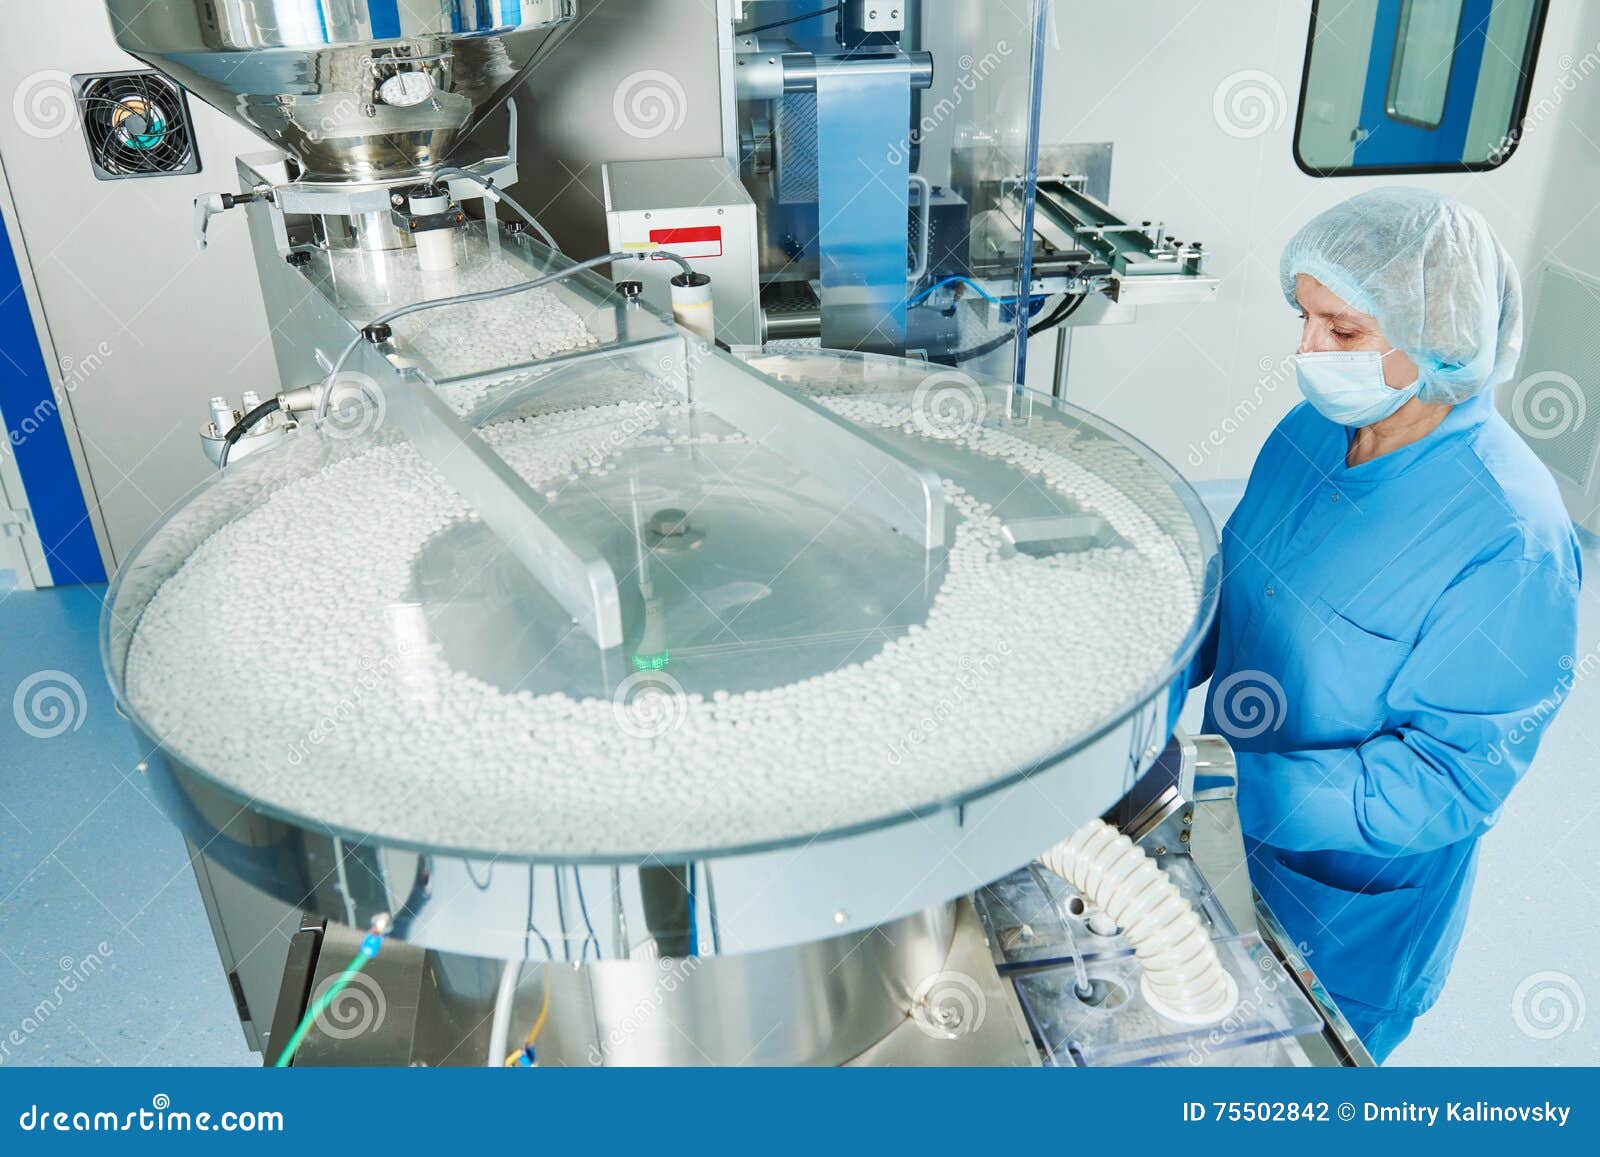 pharmaceutics. pharmaceutical worker operates tablet blister packaging machine